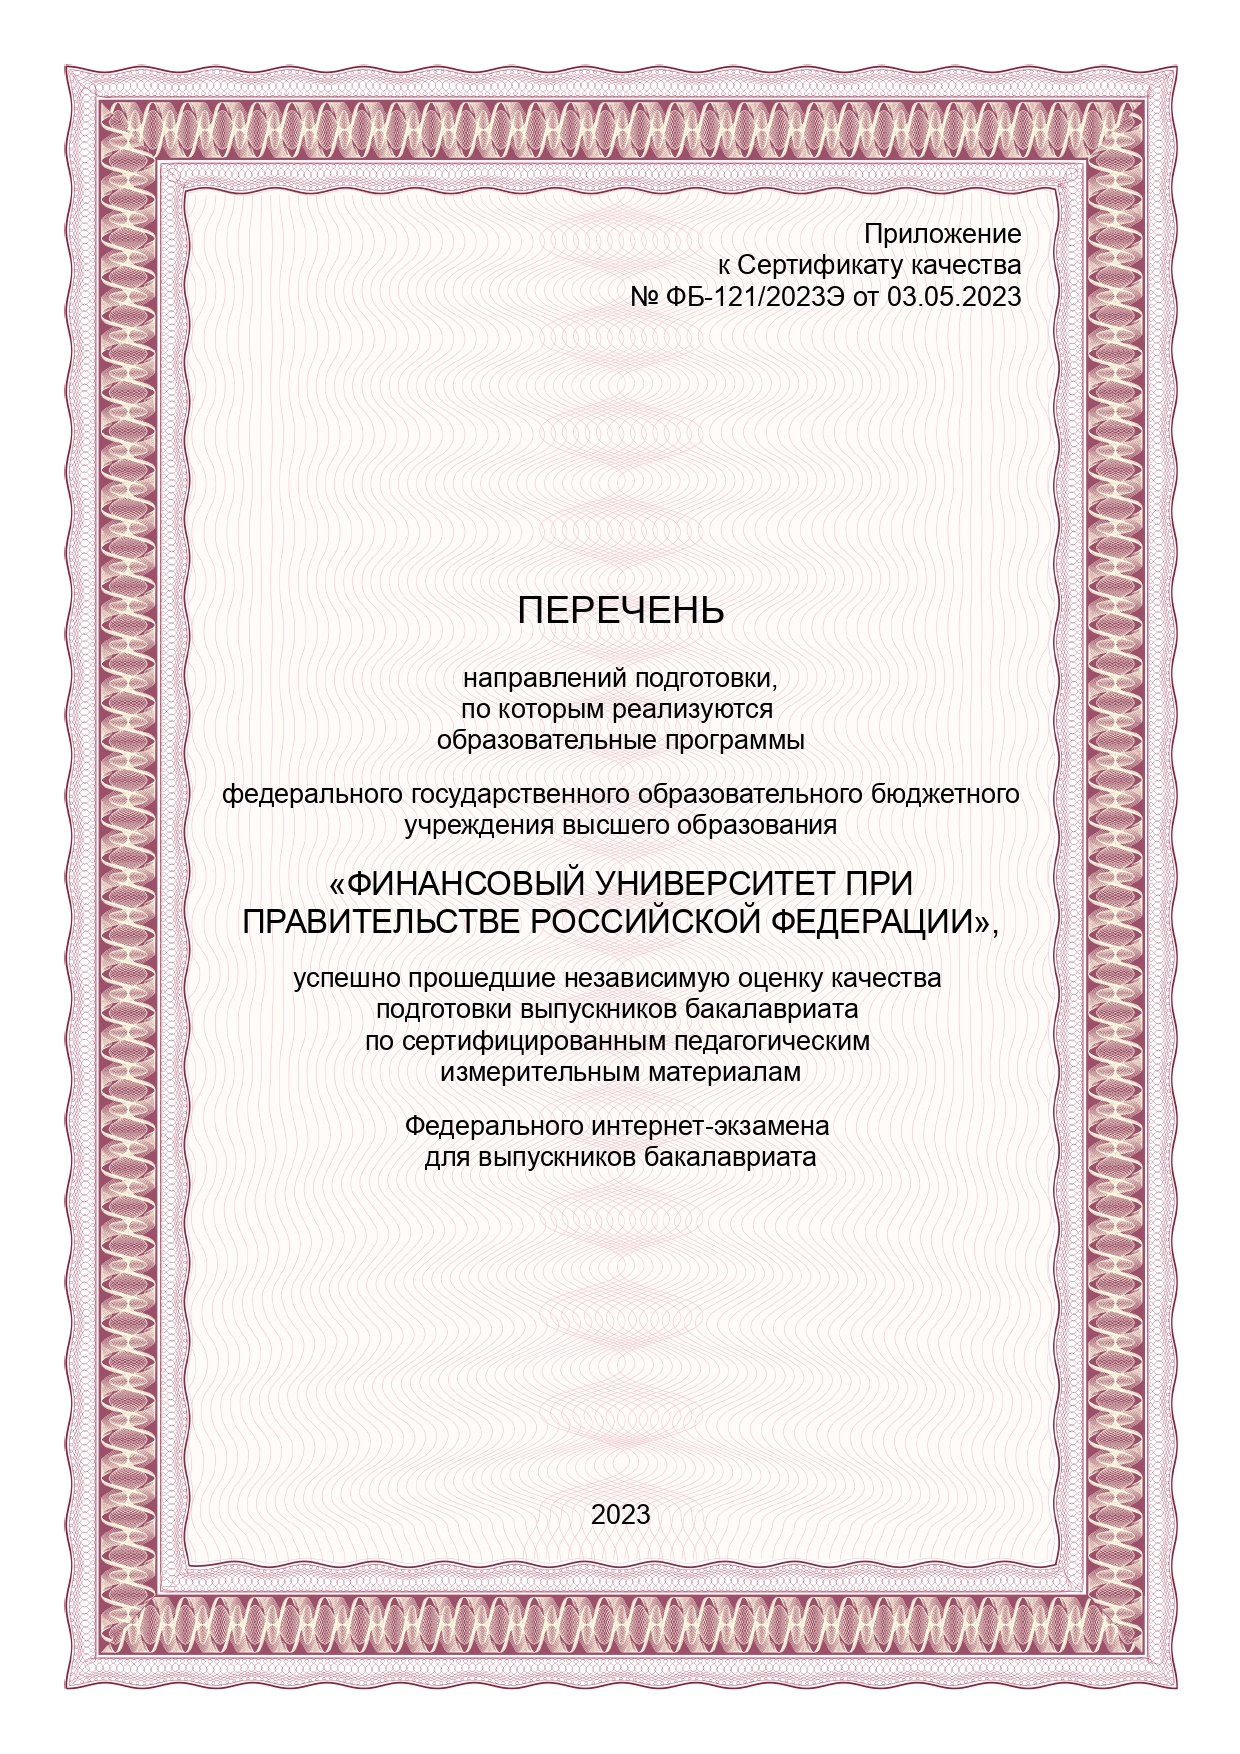 Сертификат качества ФИЭБ 2023-1_page-0001.jpg